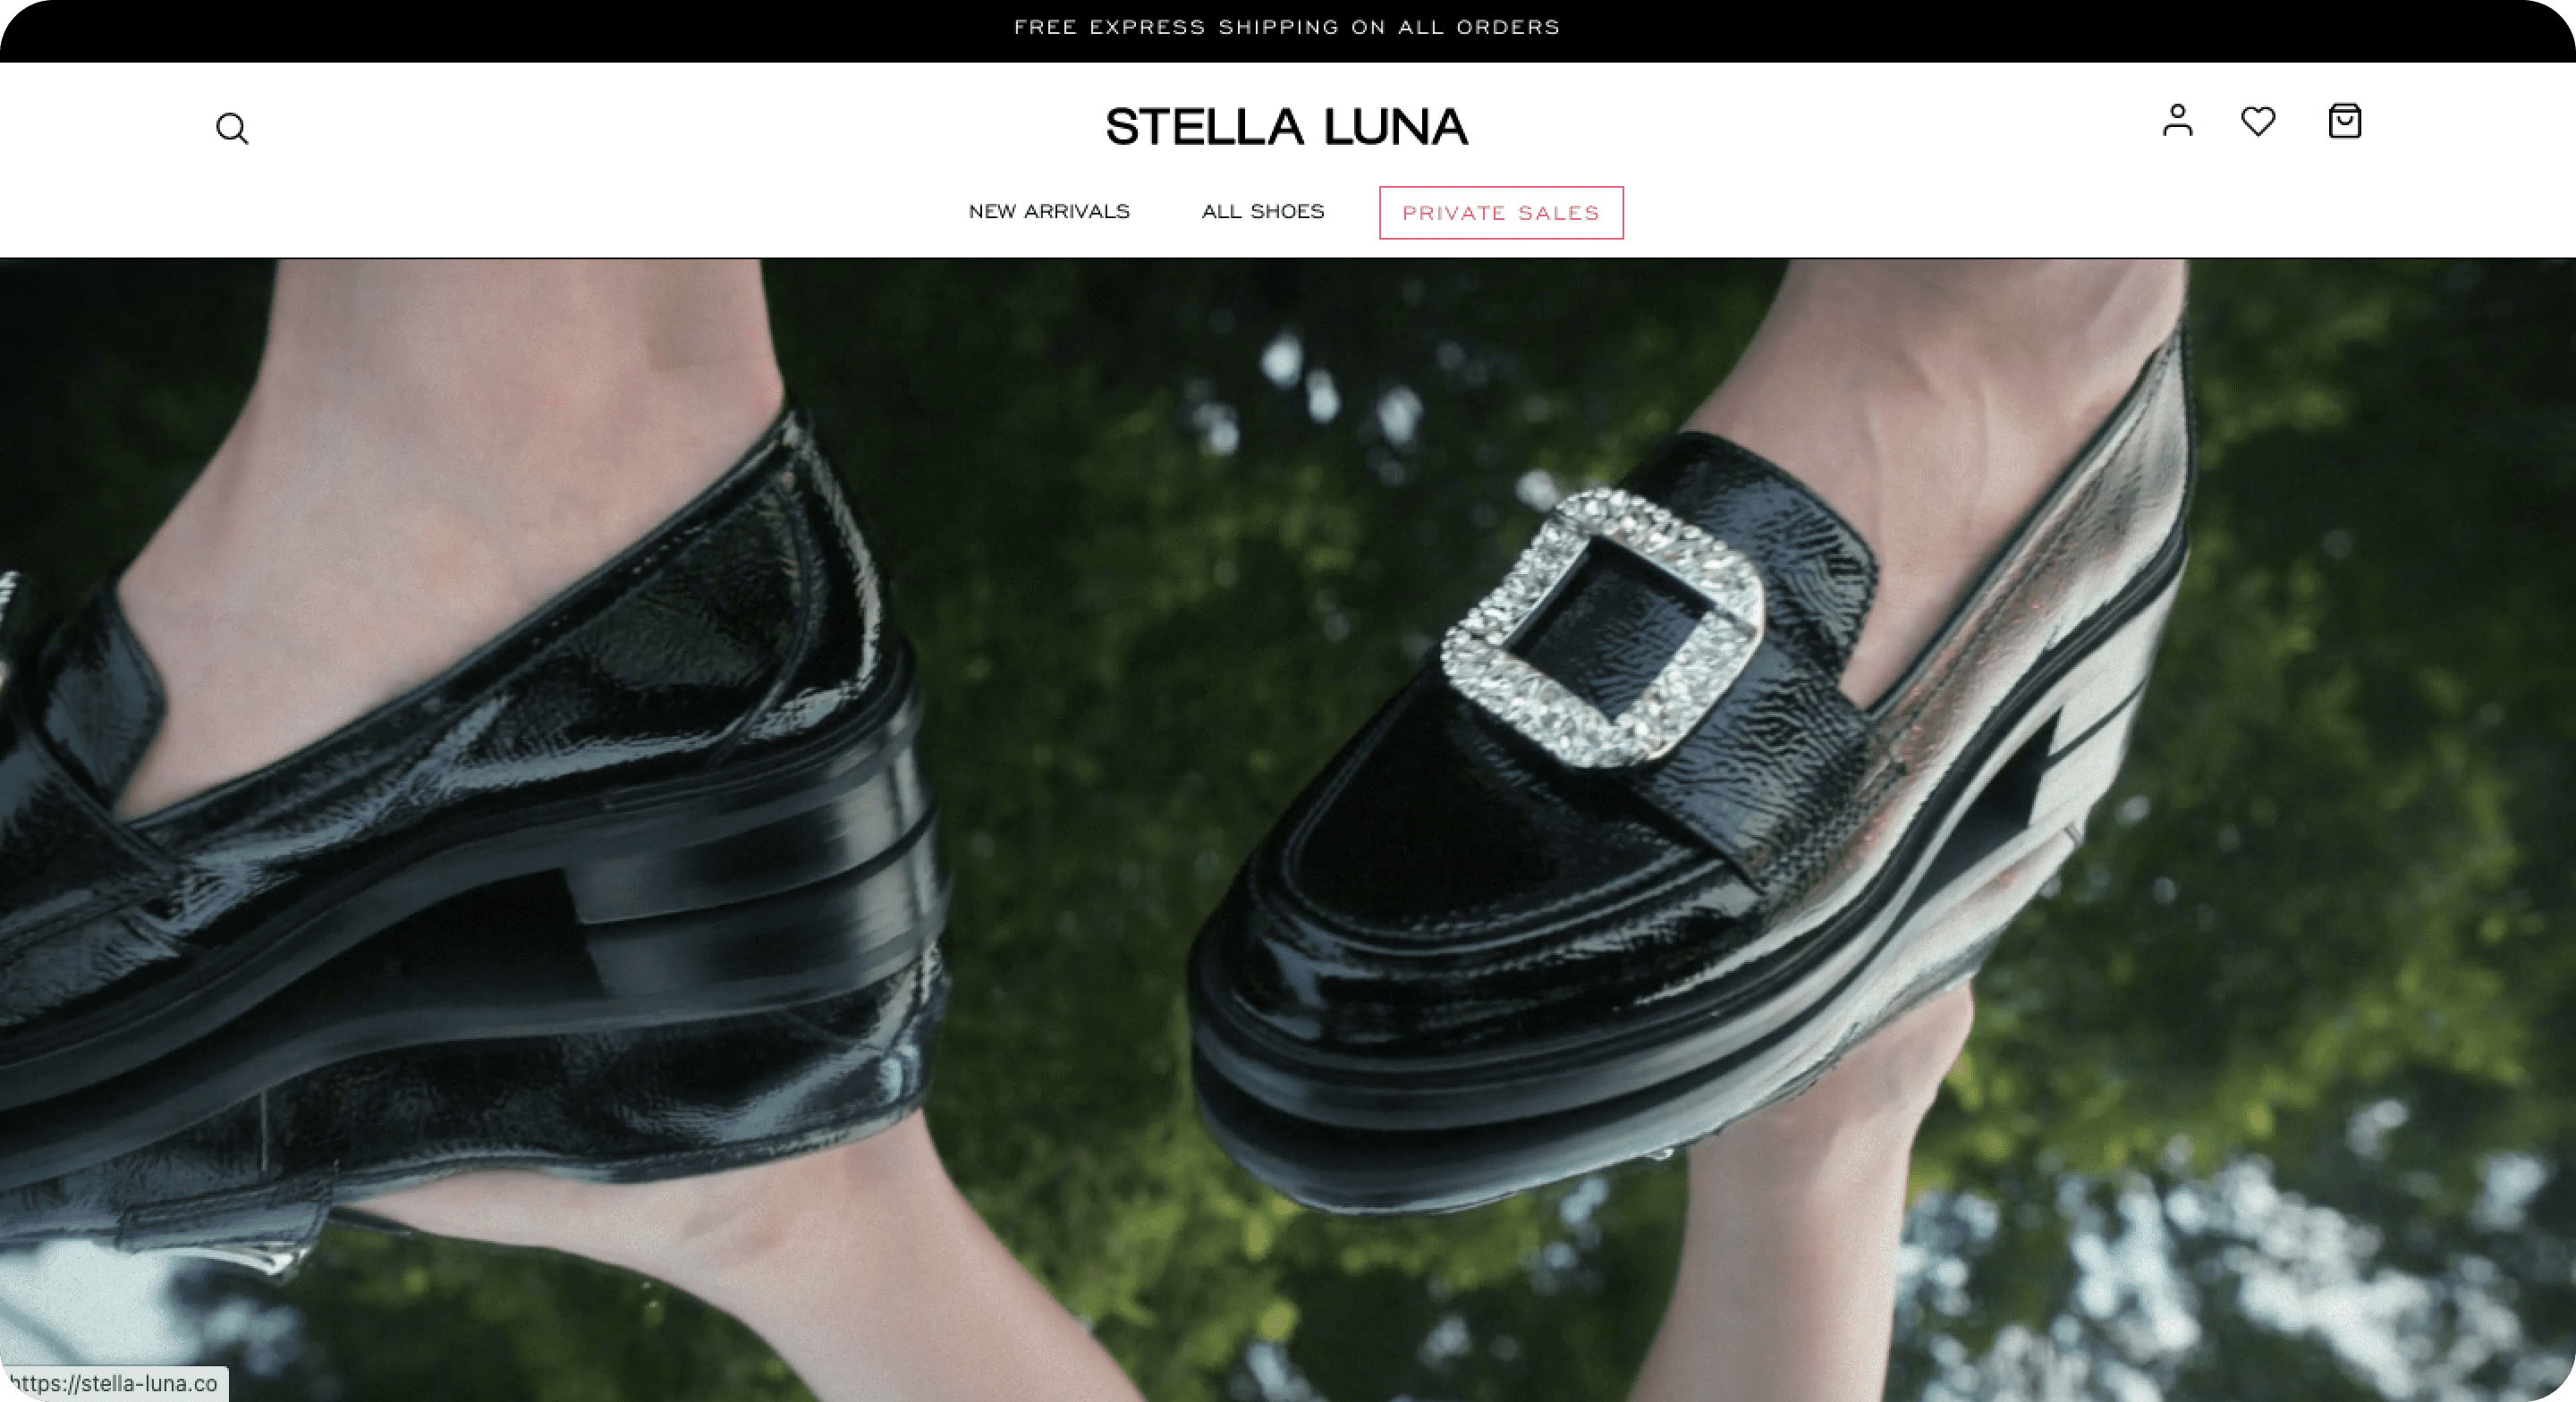 ITC built the Stella Luna website using Magento